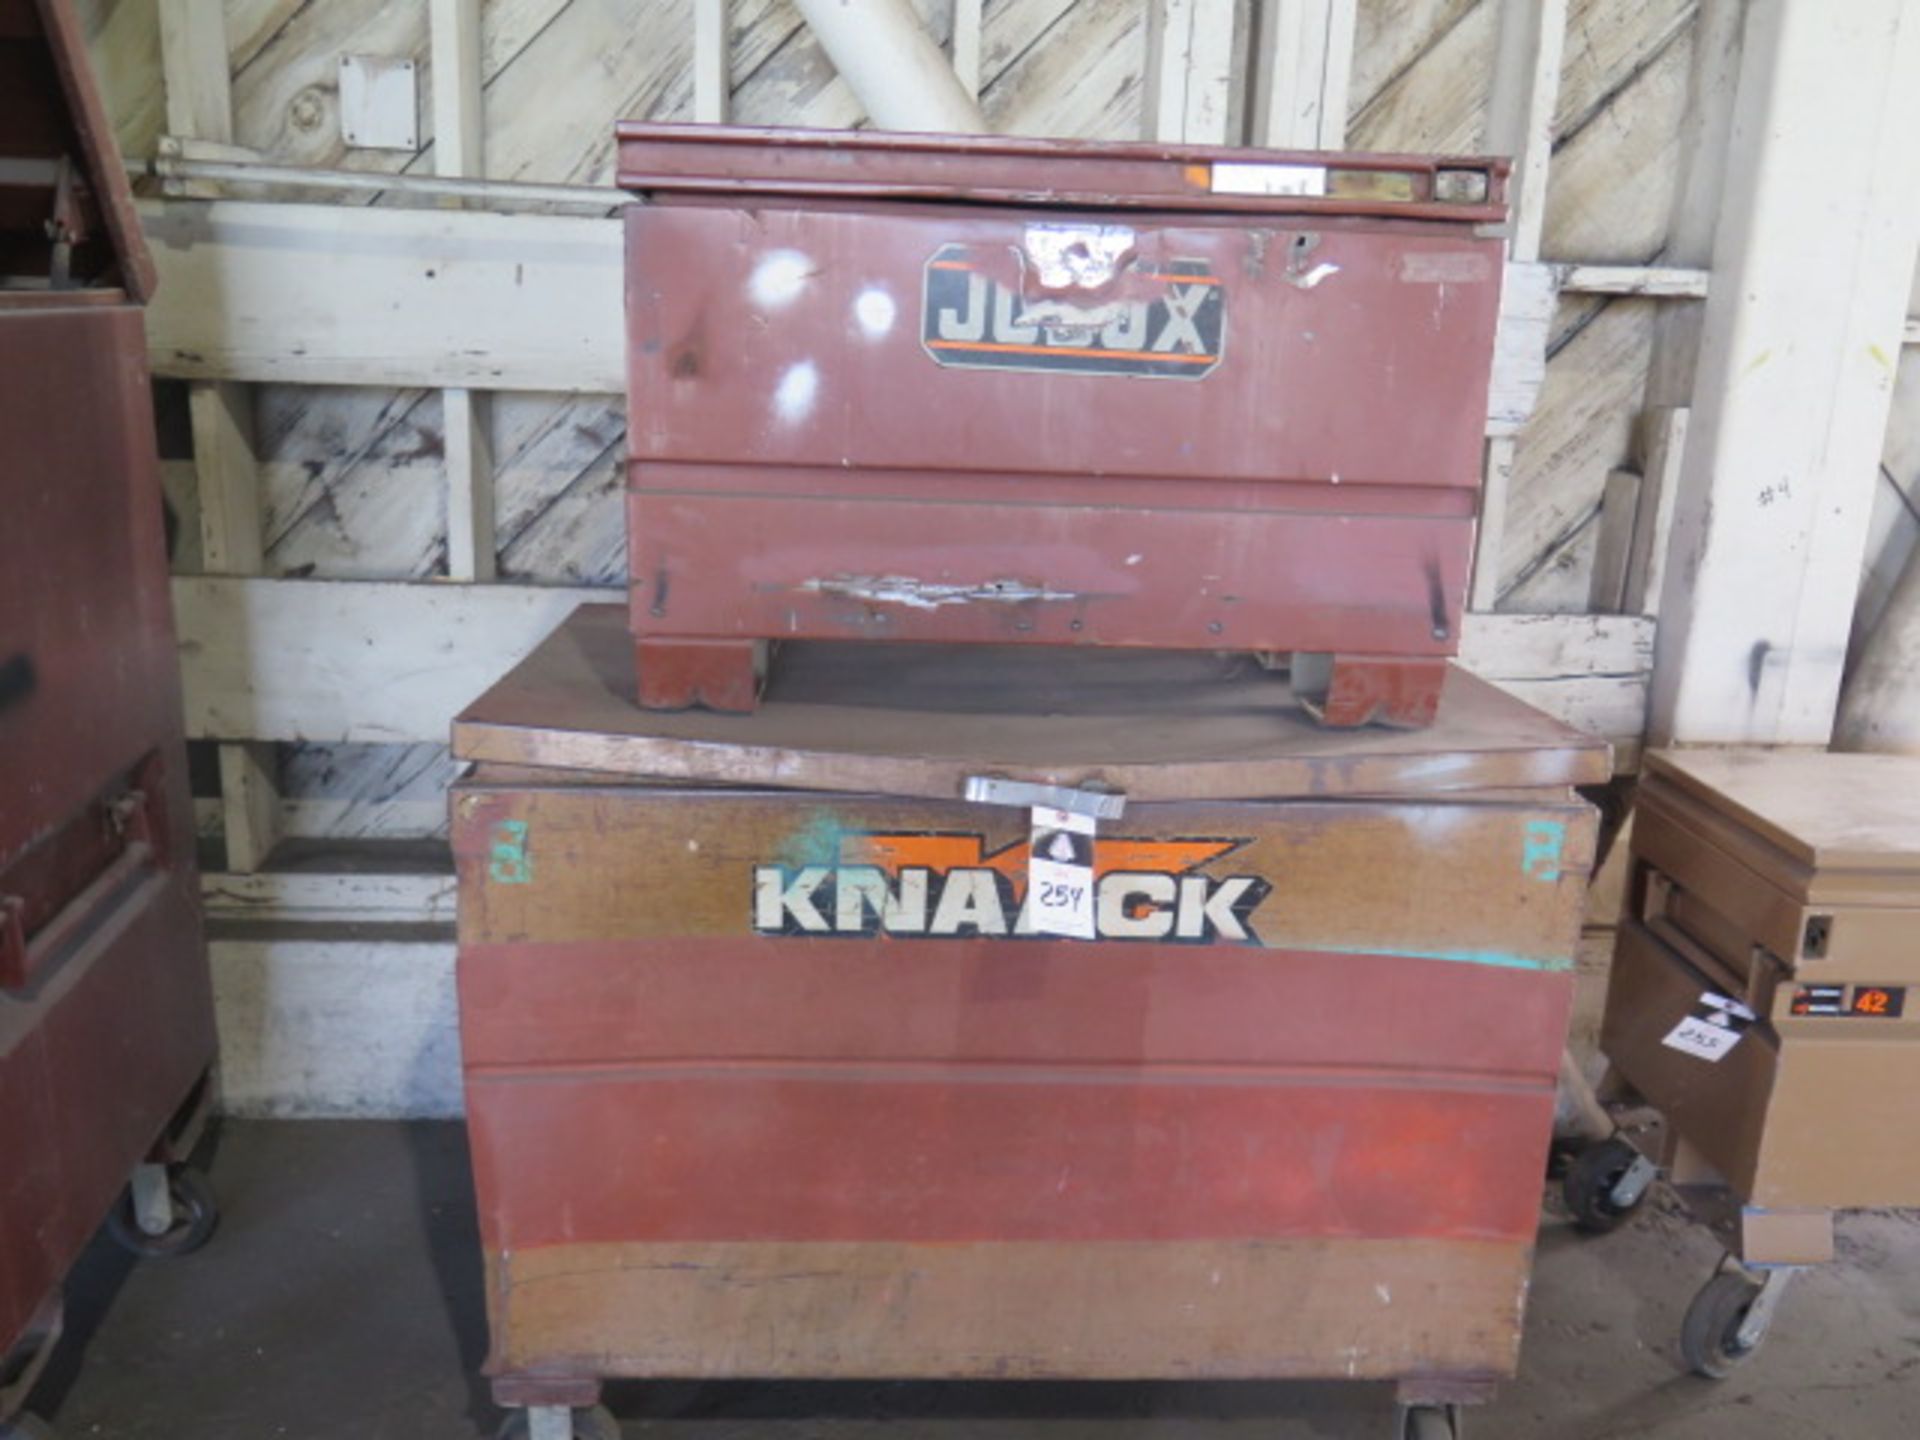 Knaack Rolling Job Box and Jobox Job Box (SOLD AS-IS - NO WARRANTY)